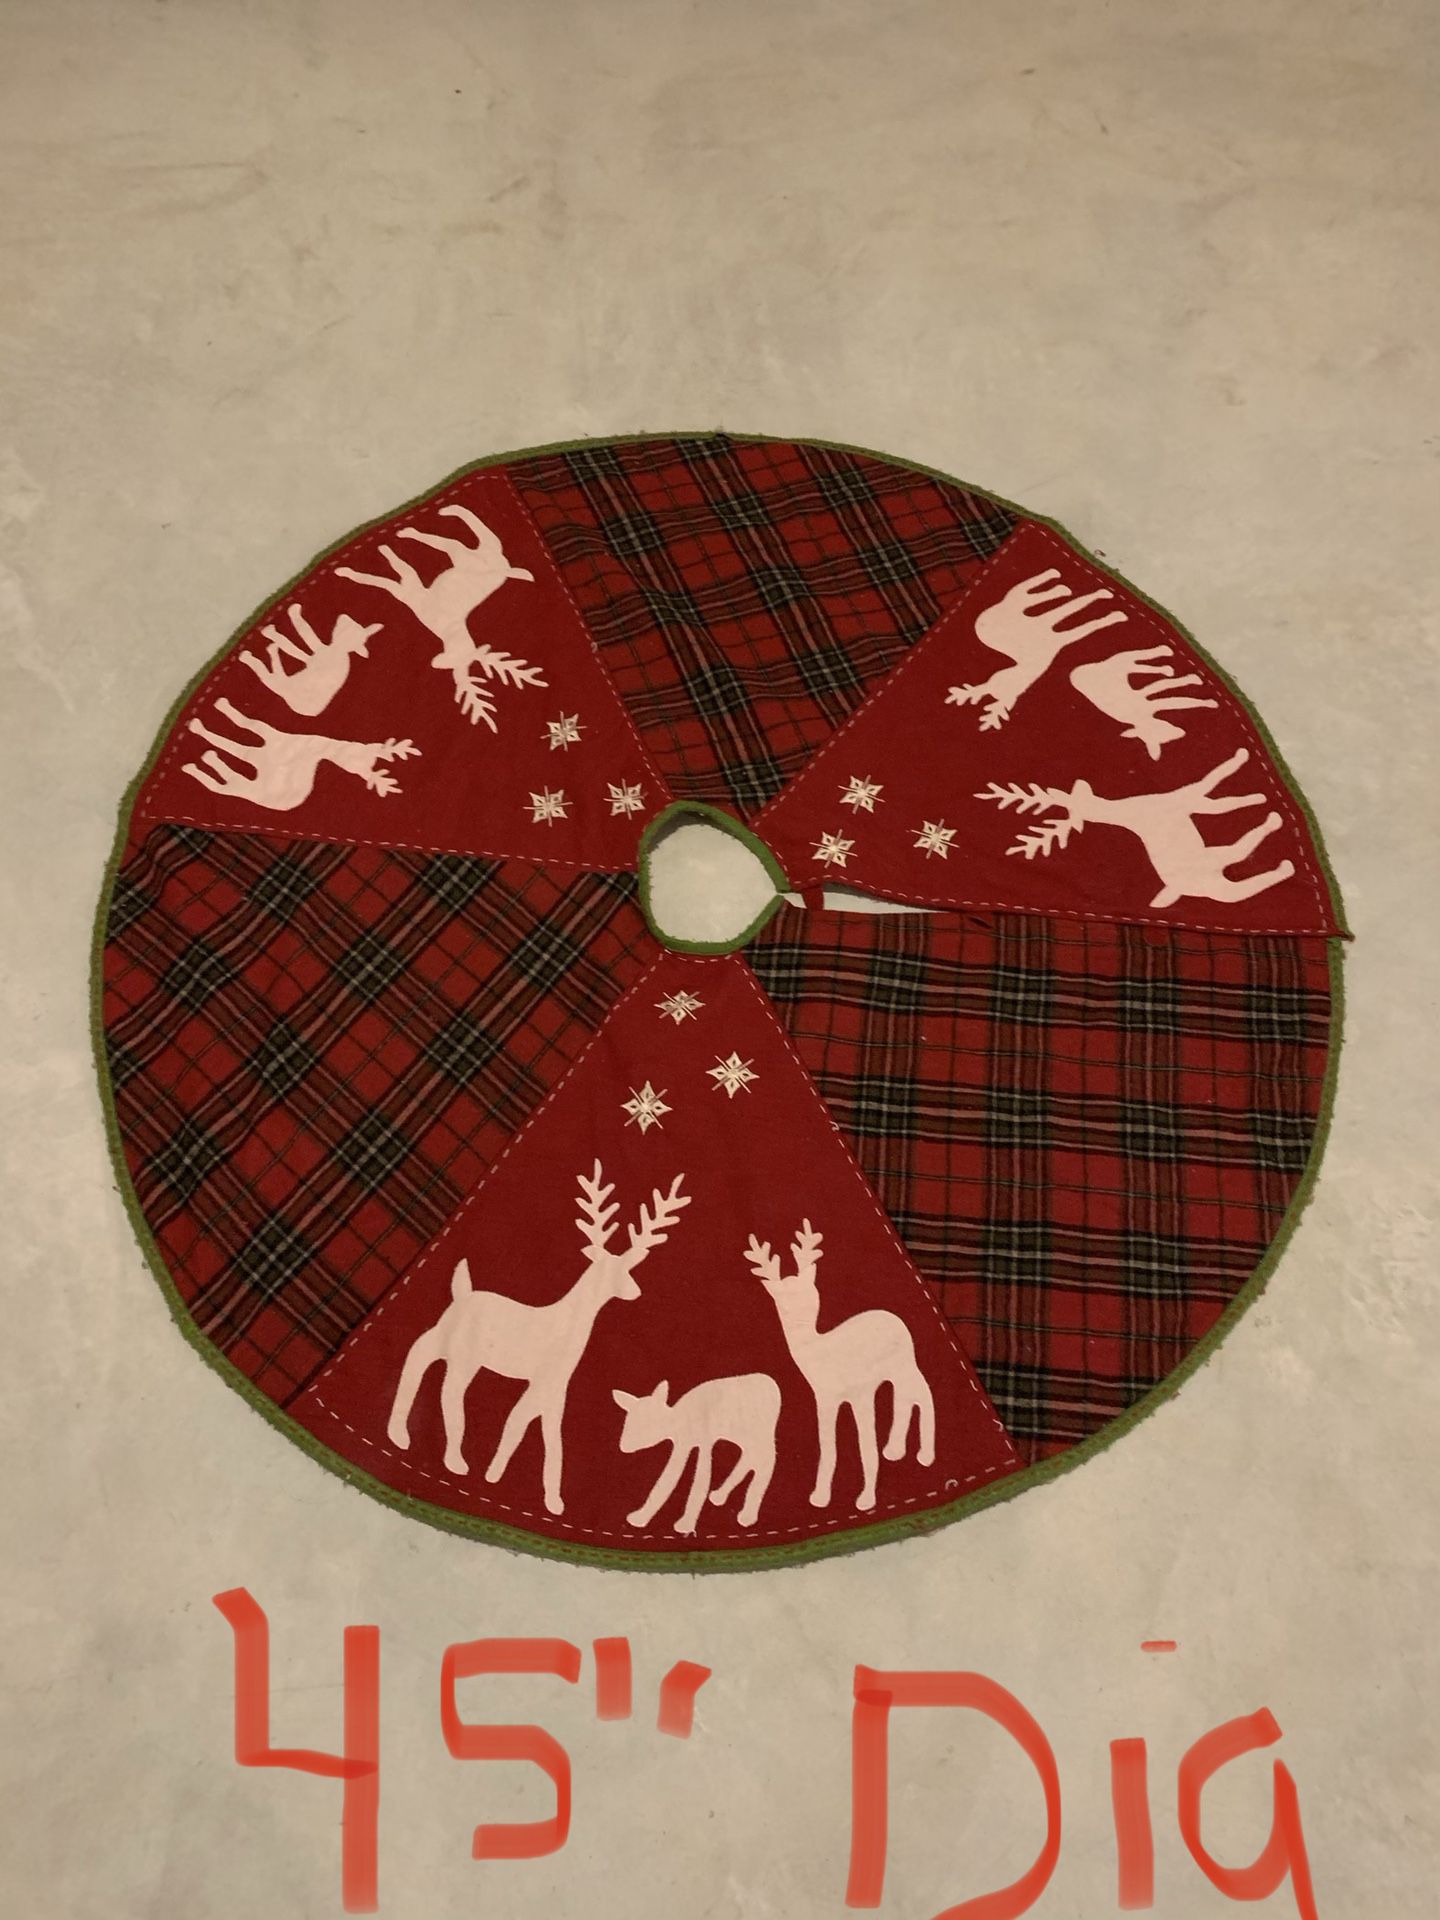 45” Diameter Christmas Tree Skirt